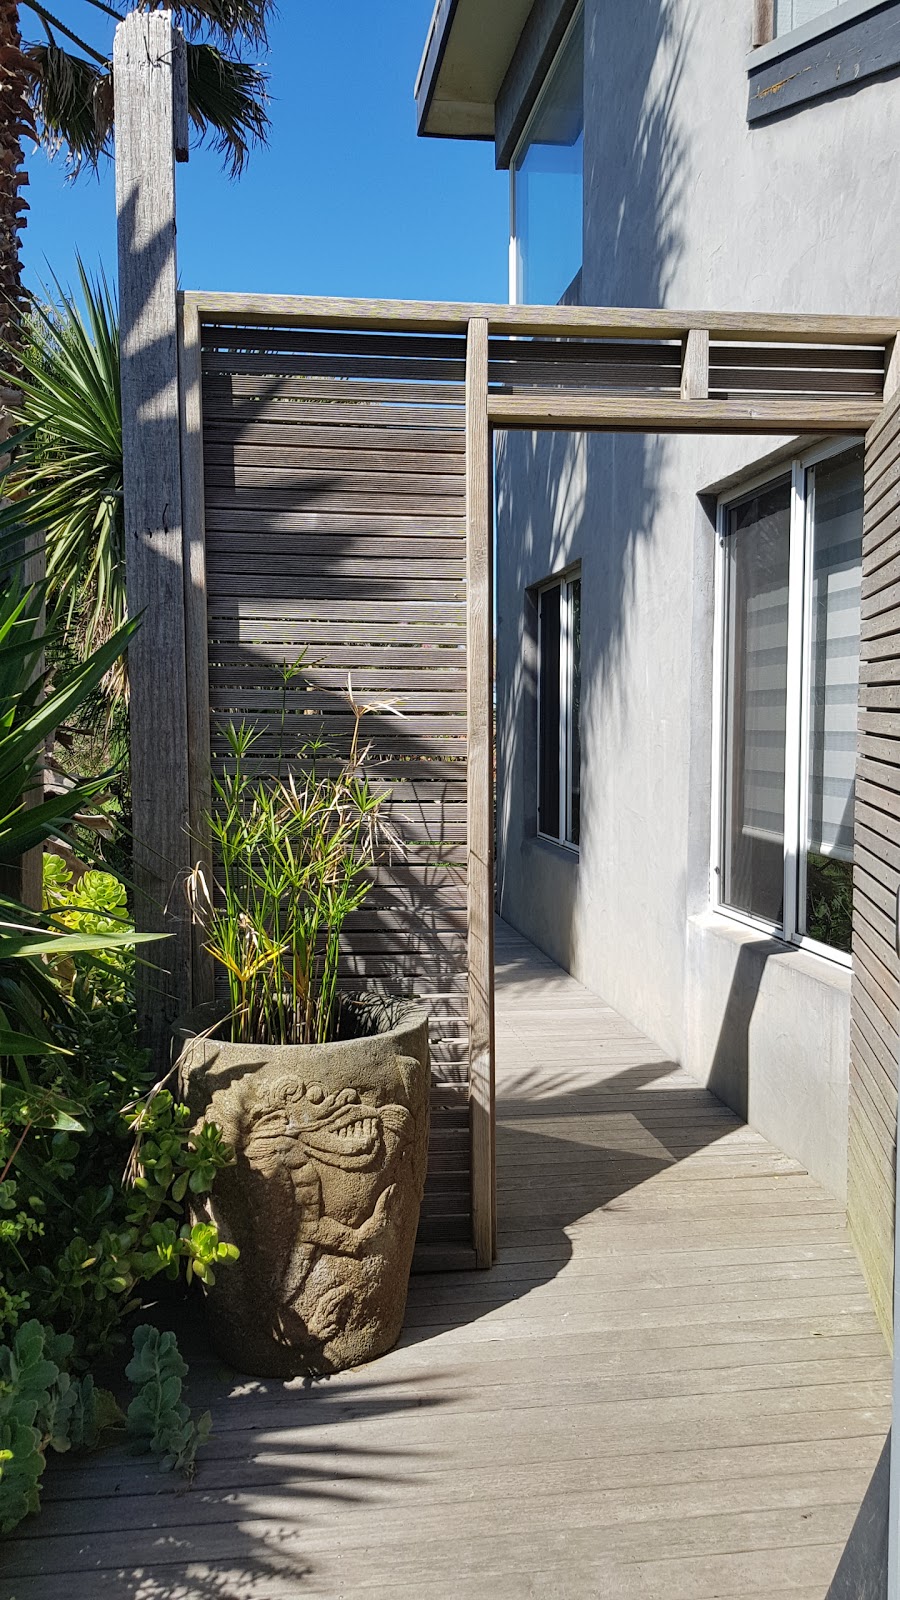 Beachwood Studio | lodging | Smiths Beach VIC 3922, Australia | 0417946878 OR +61 417 946 878